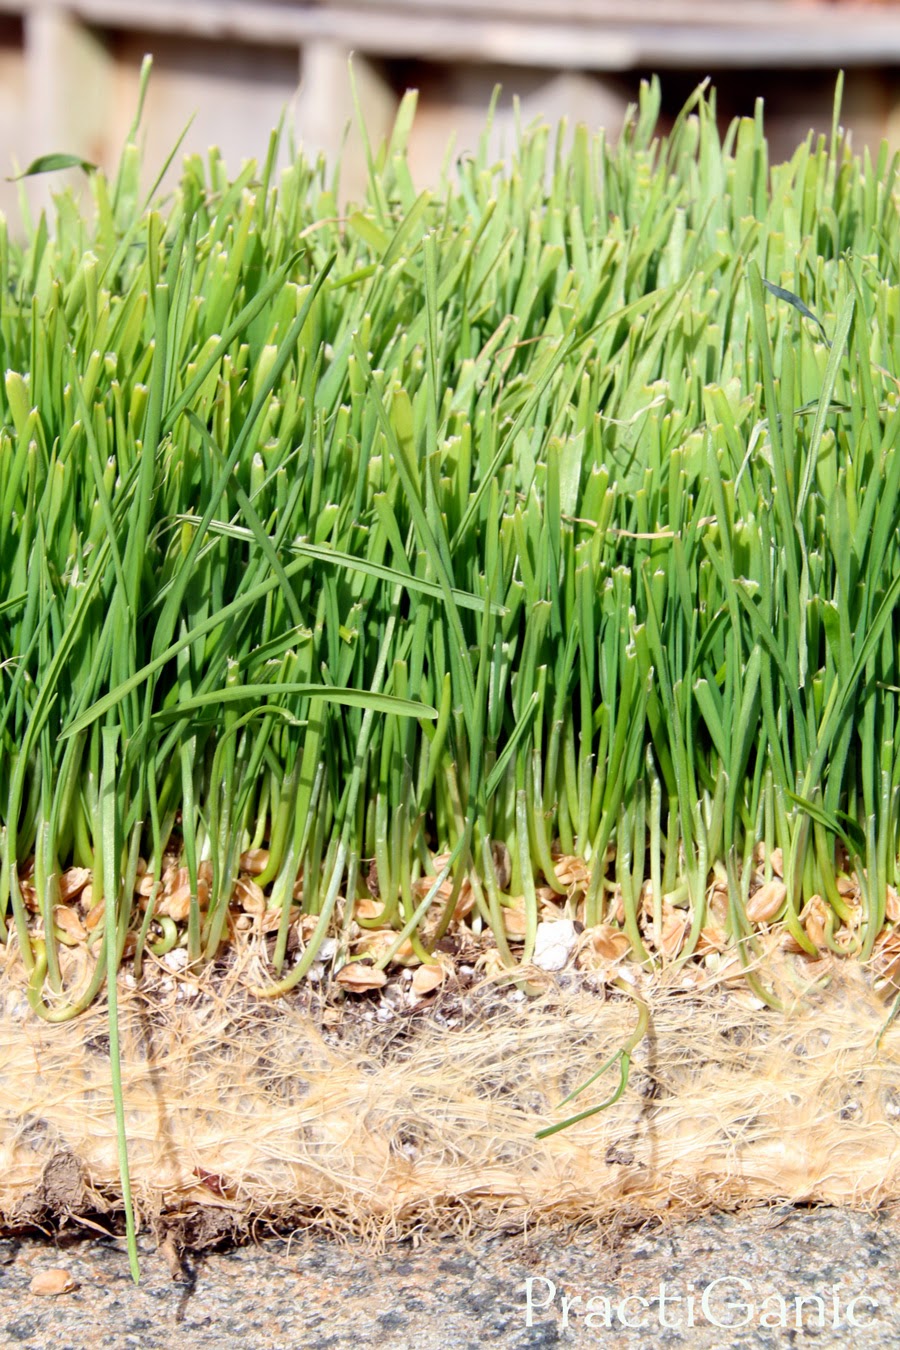 Why I Love Wheatgrass